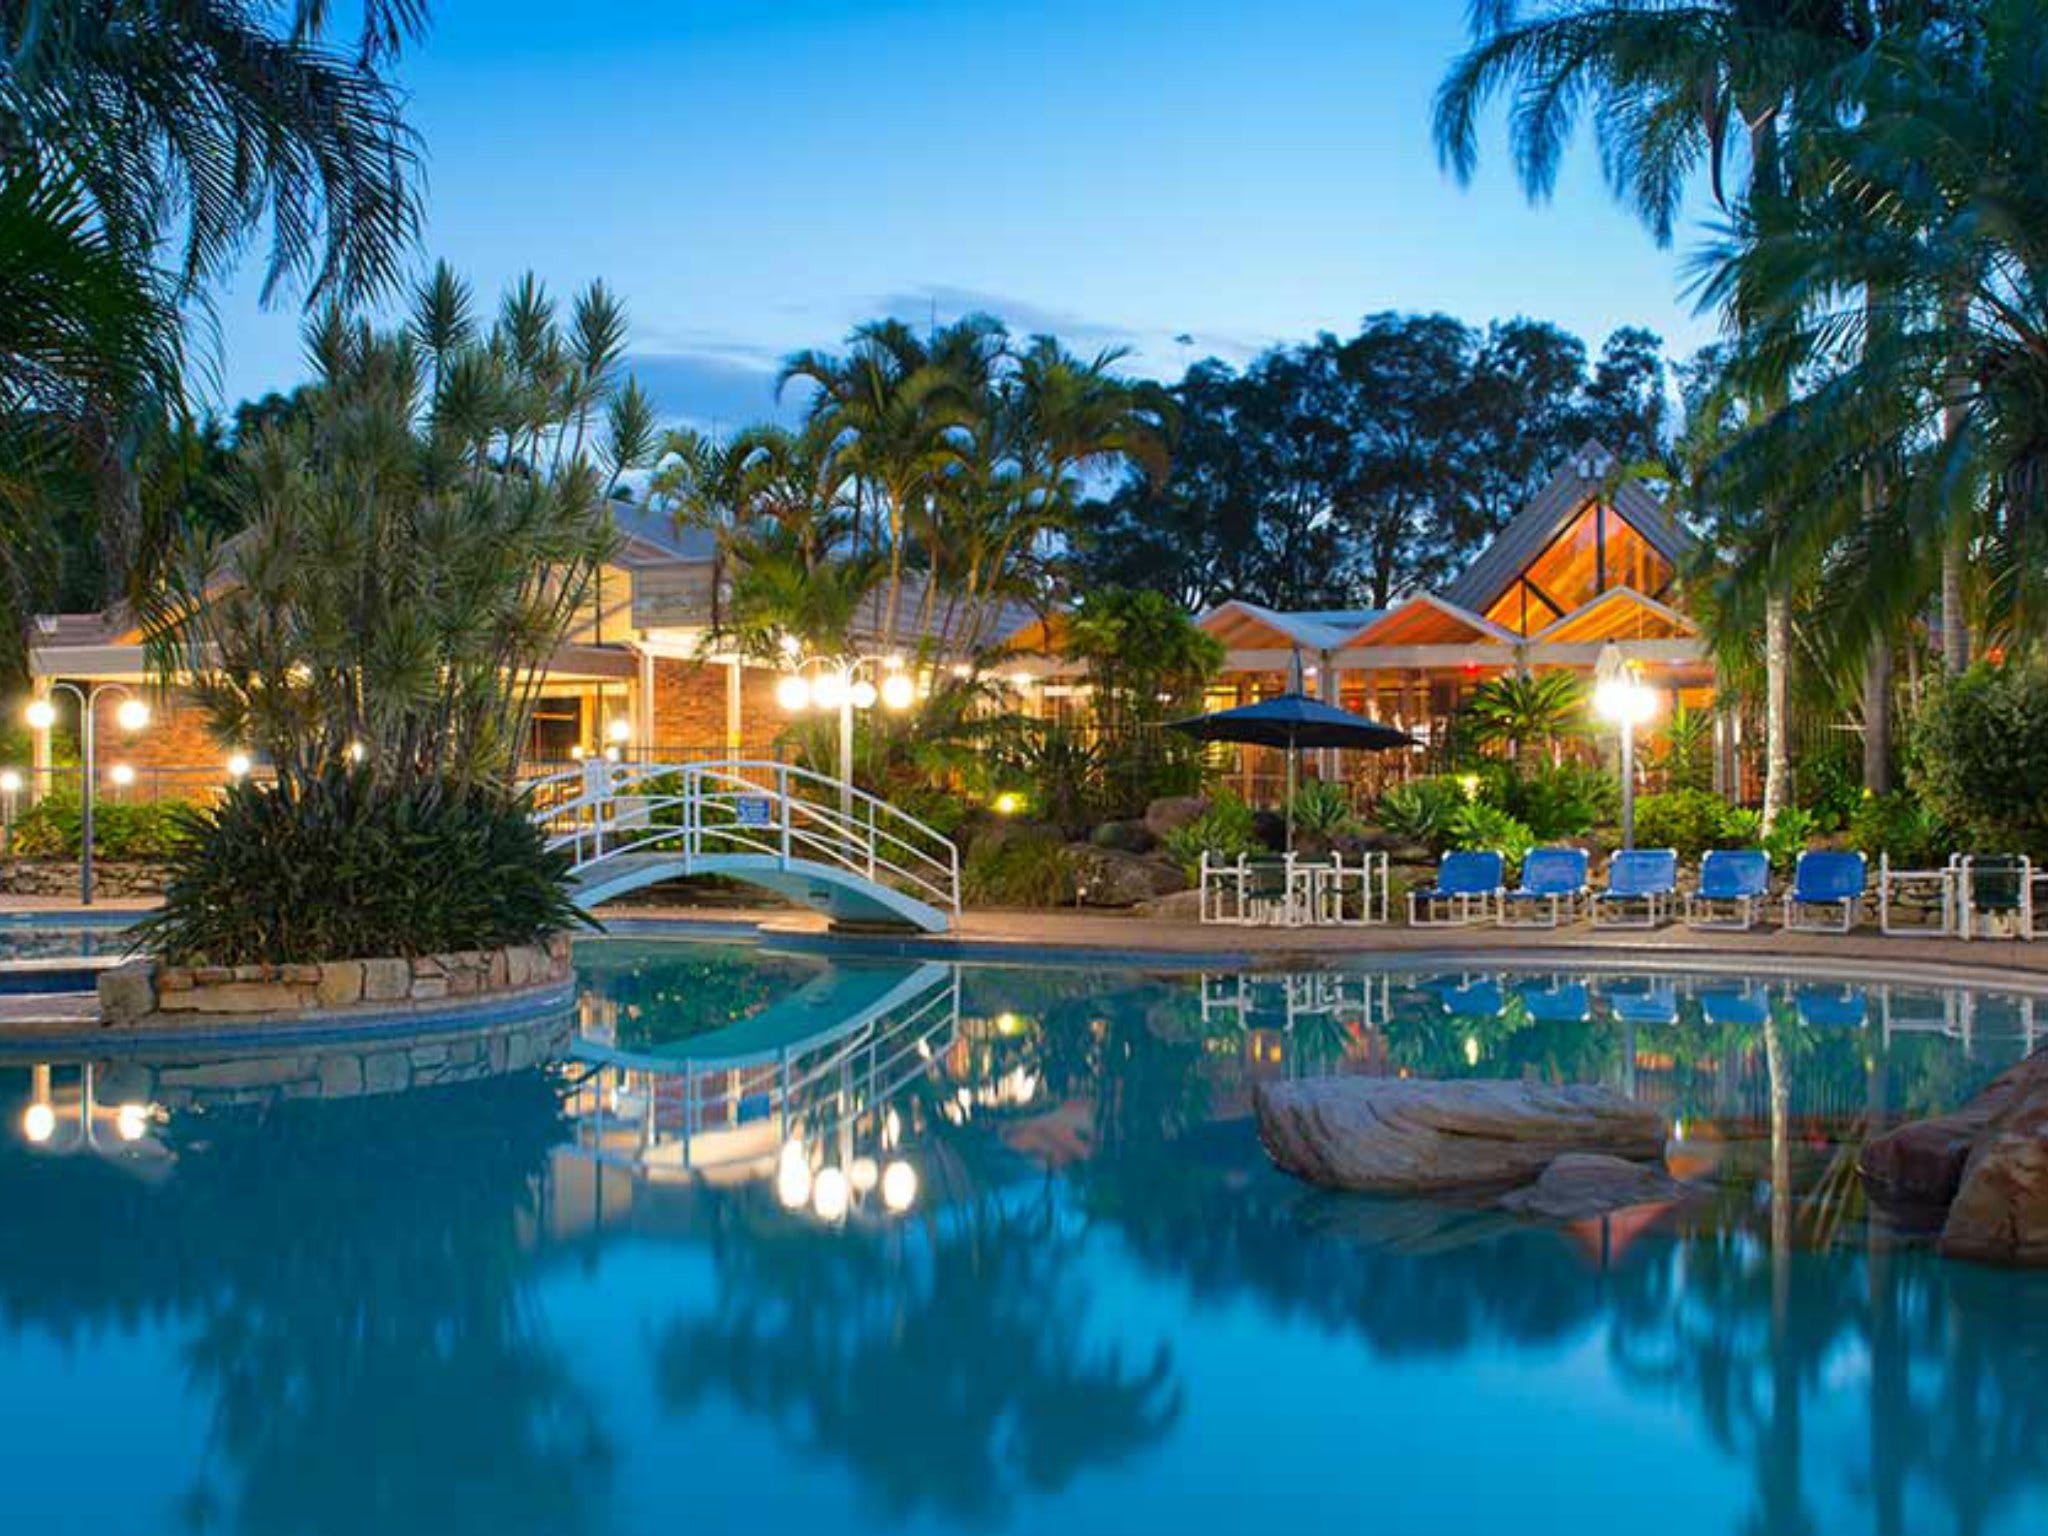 Boambee Bay Resort - Accommodation Port Macquarie